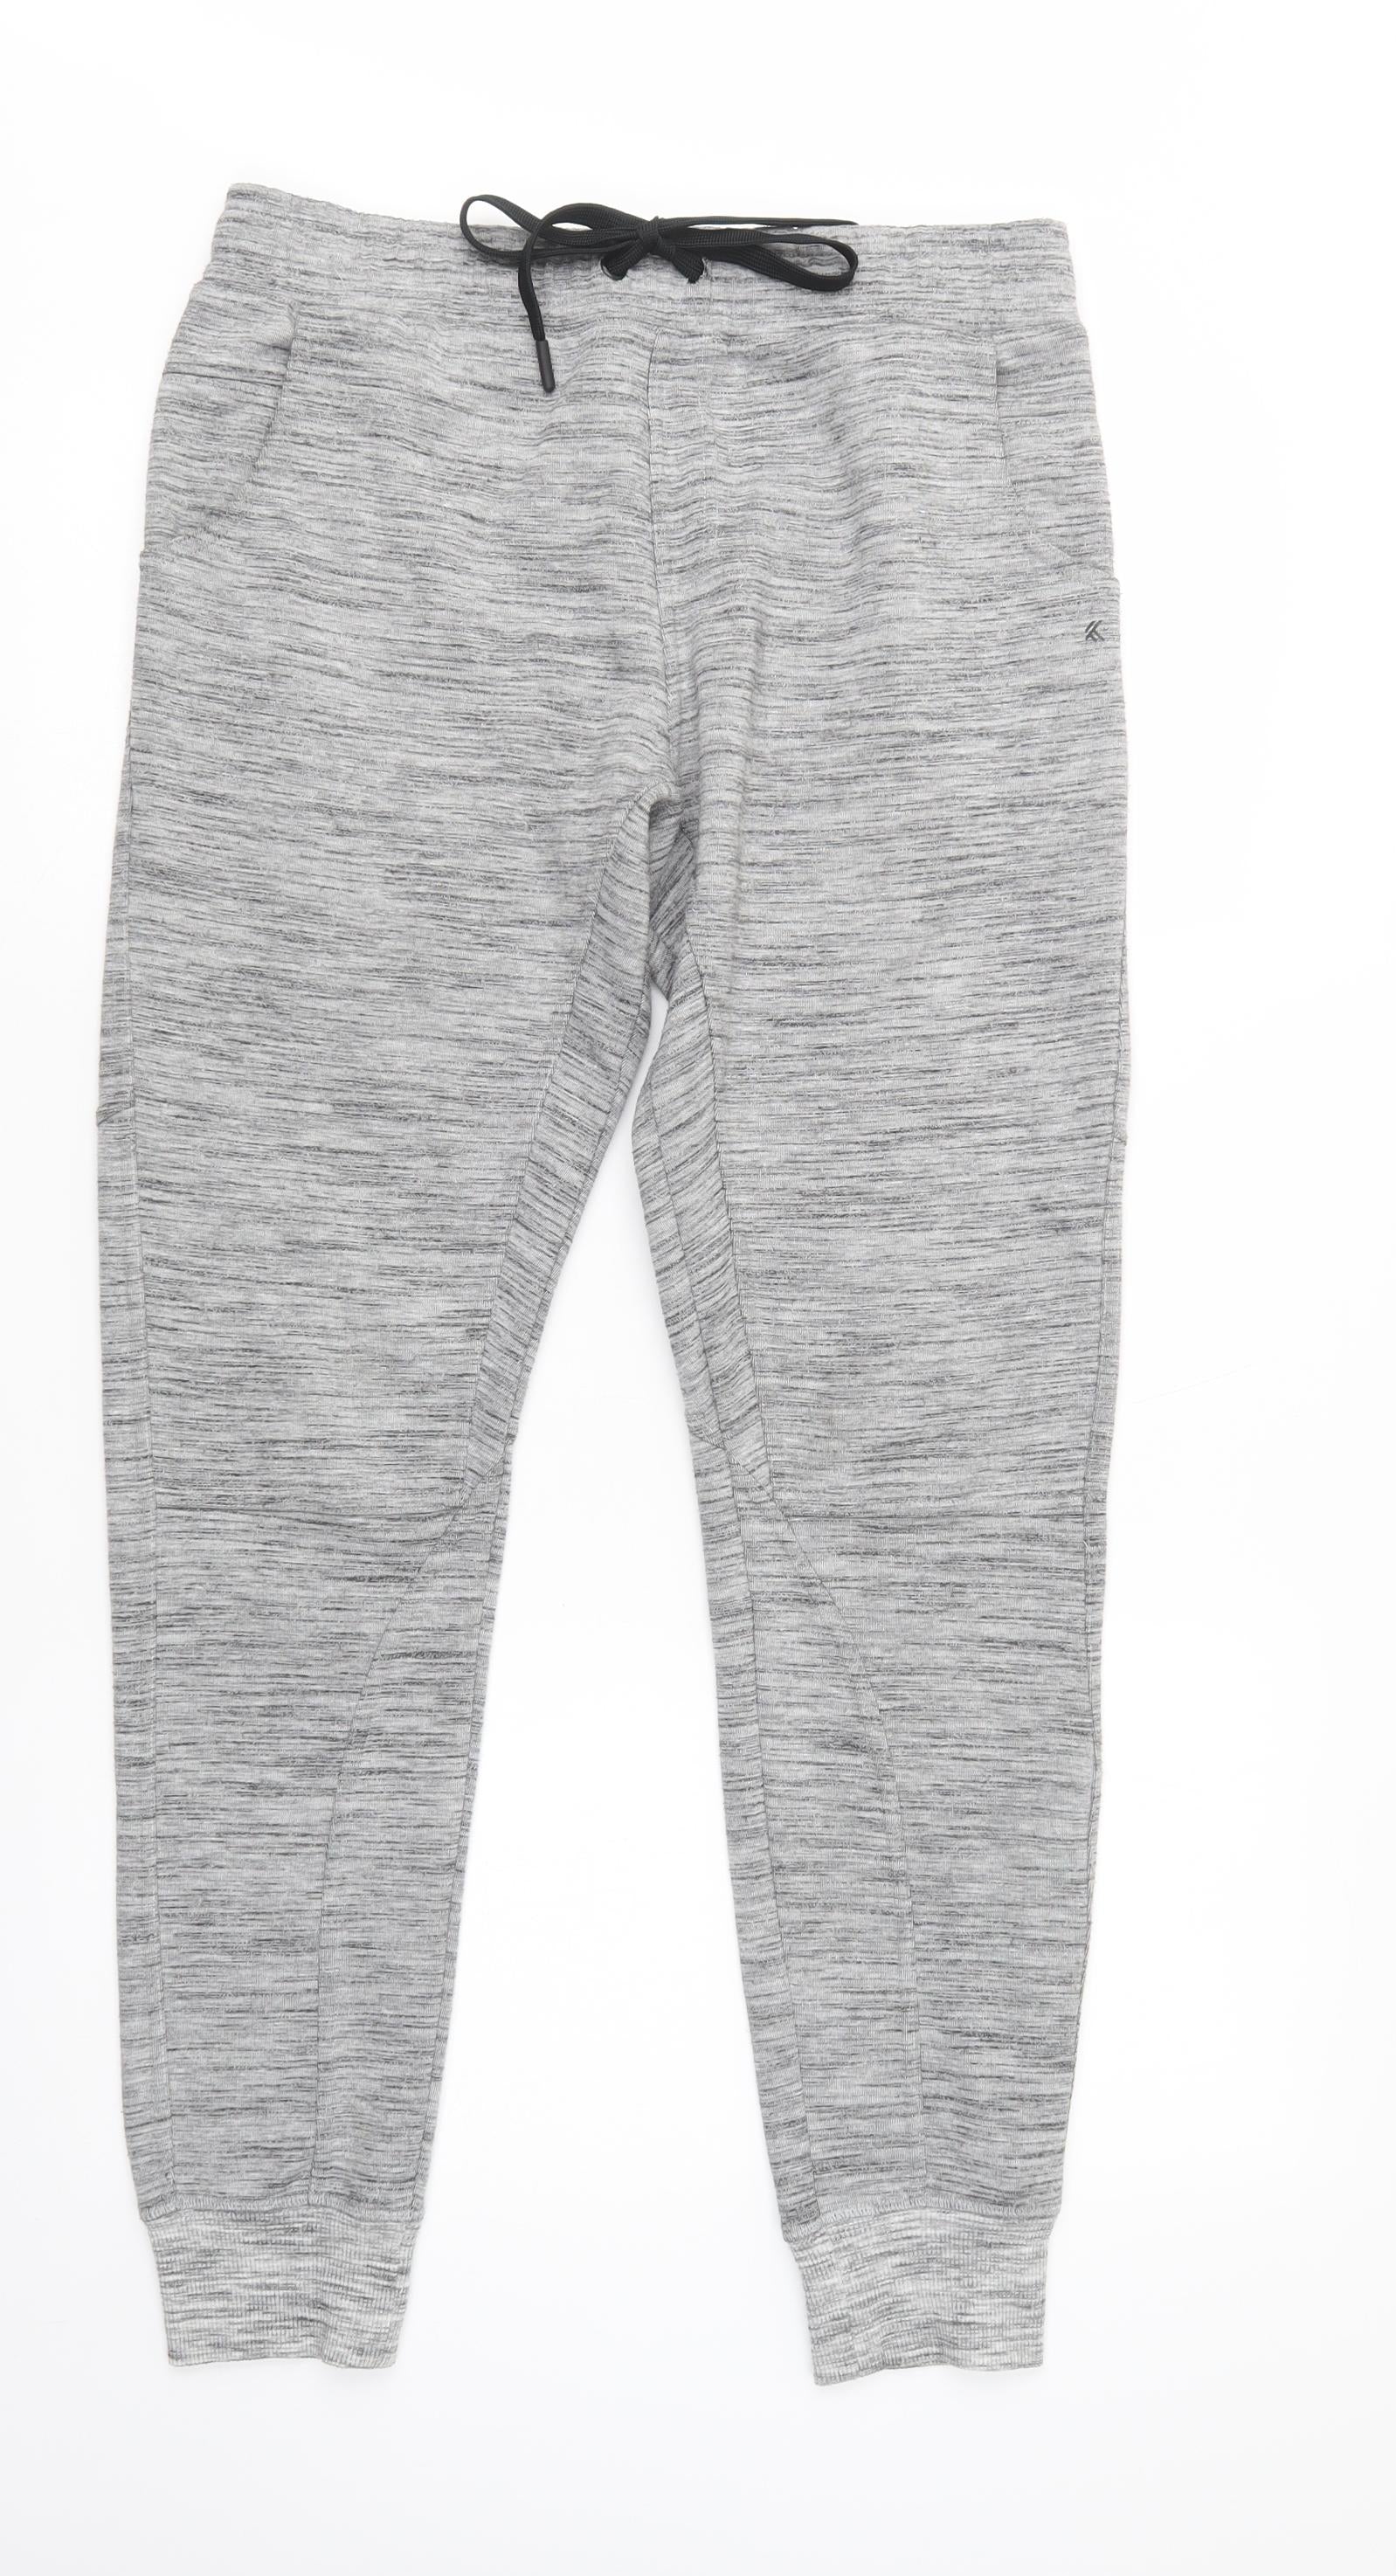 Kyodan Mens Grey Cotton Jogger Trousers Size M L30 in Regular Drawstri –  Preworn Ltd